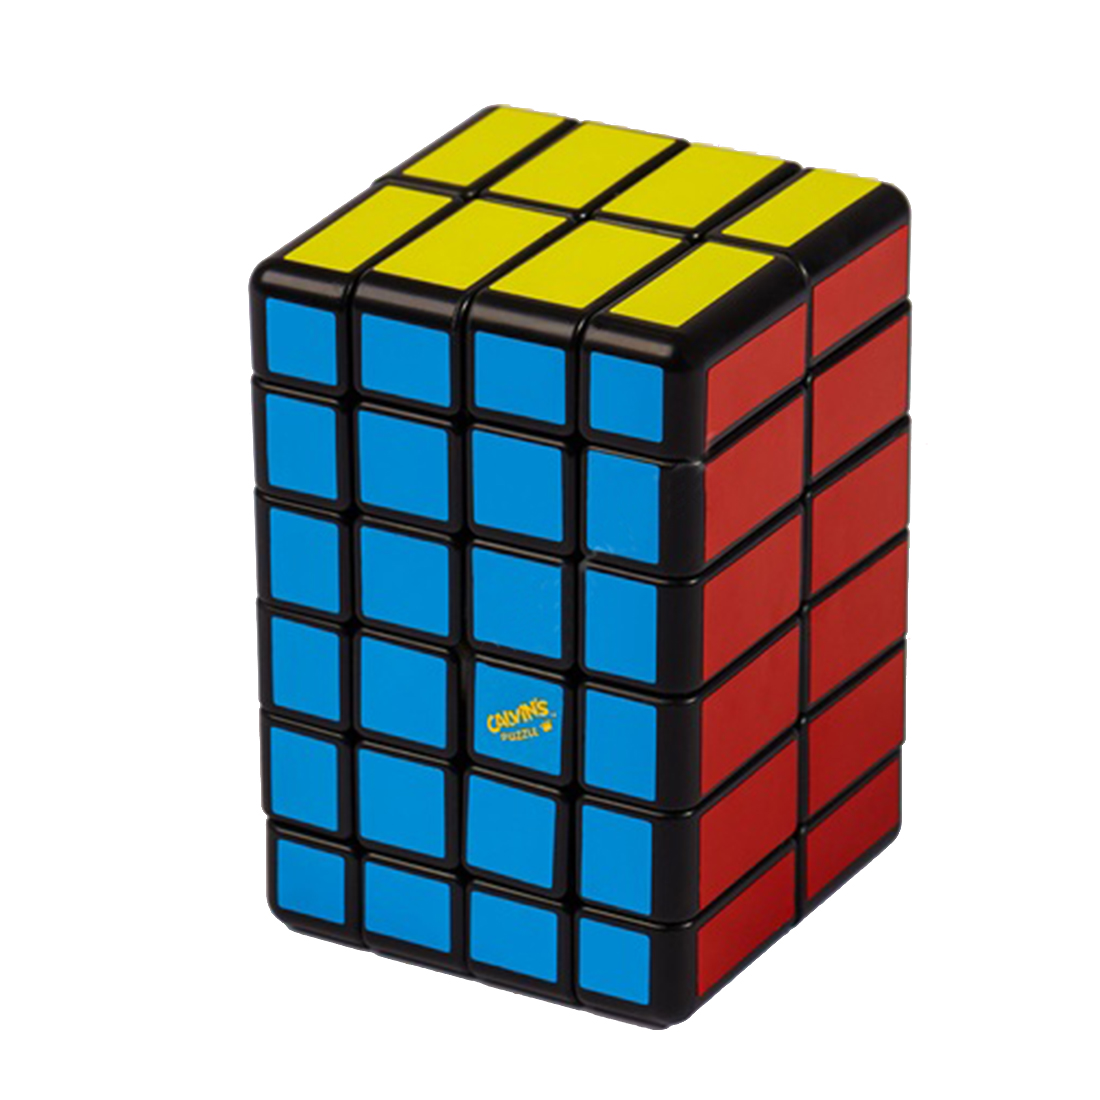 Calvin's Flat 2x4x6 Cuboid Cube (Black Frame)